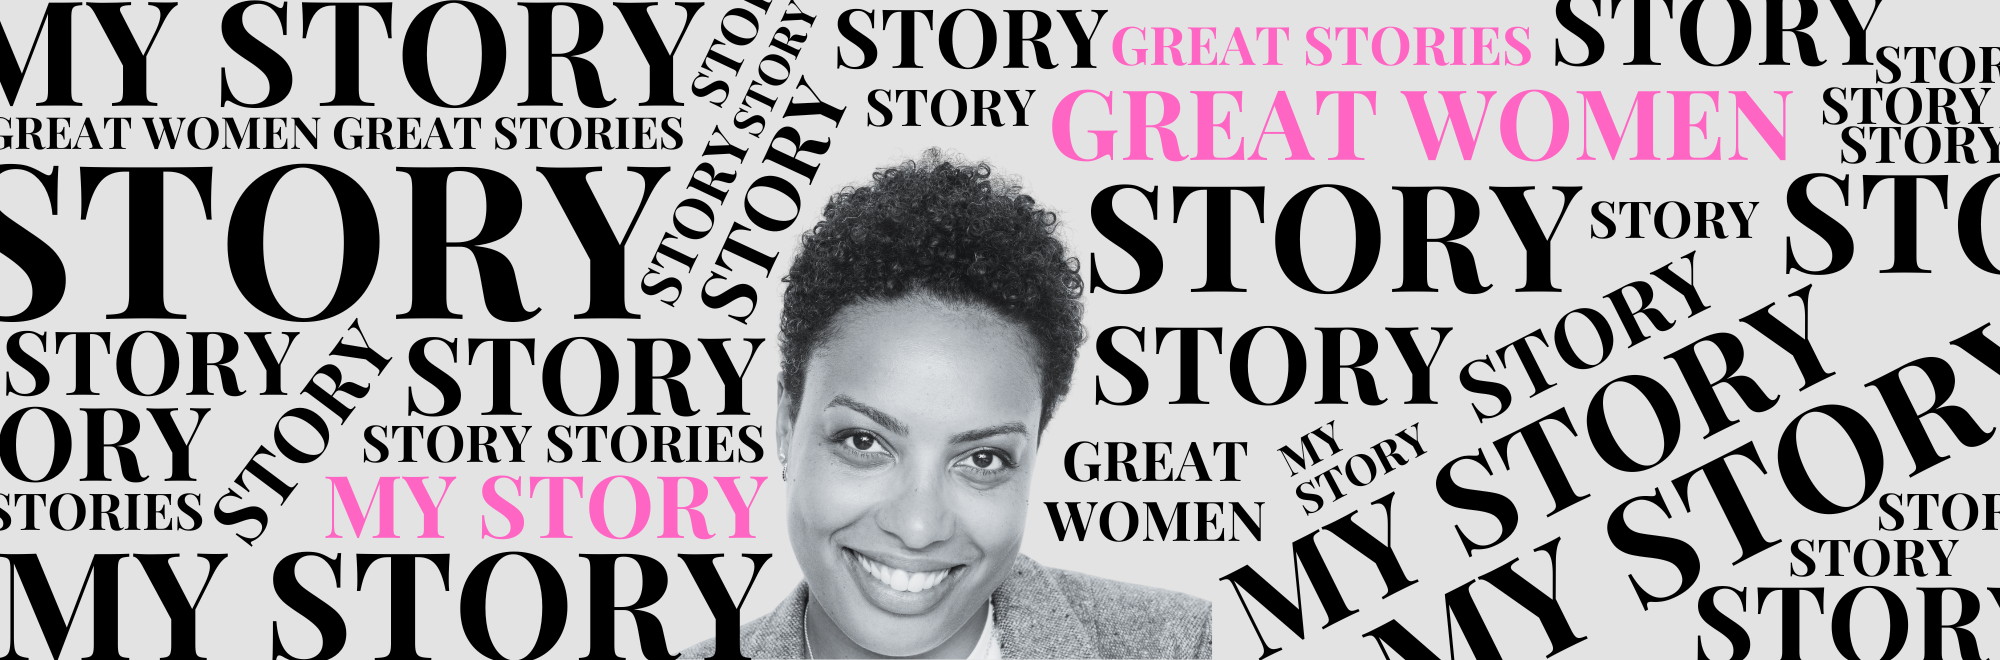 Great stories make great women